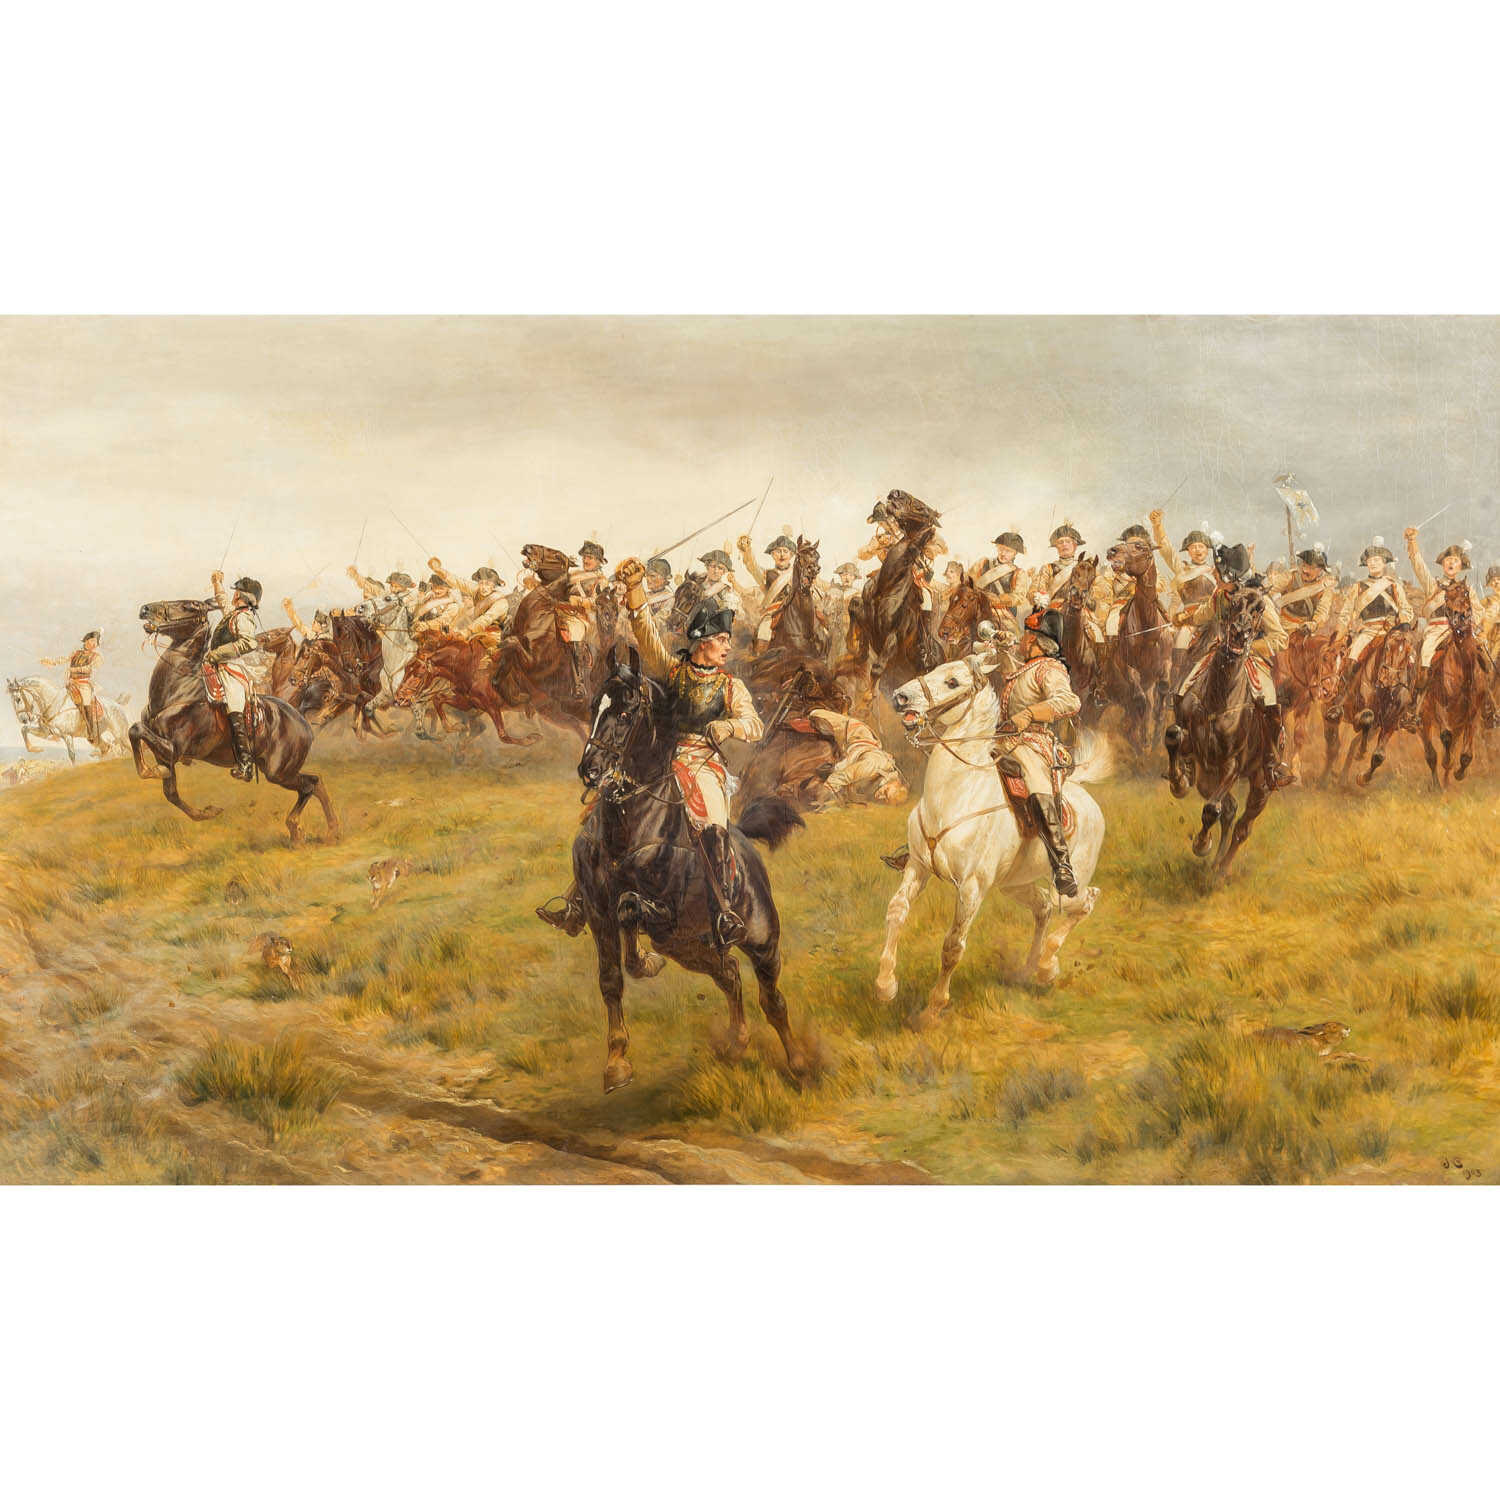 CHARLTON, JOHN (1849-1917, English painter), "The Battle of Rossbach",